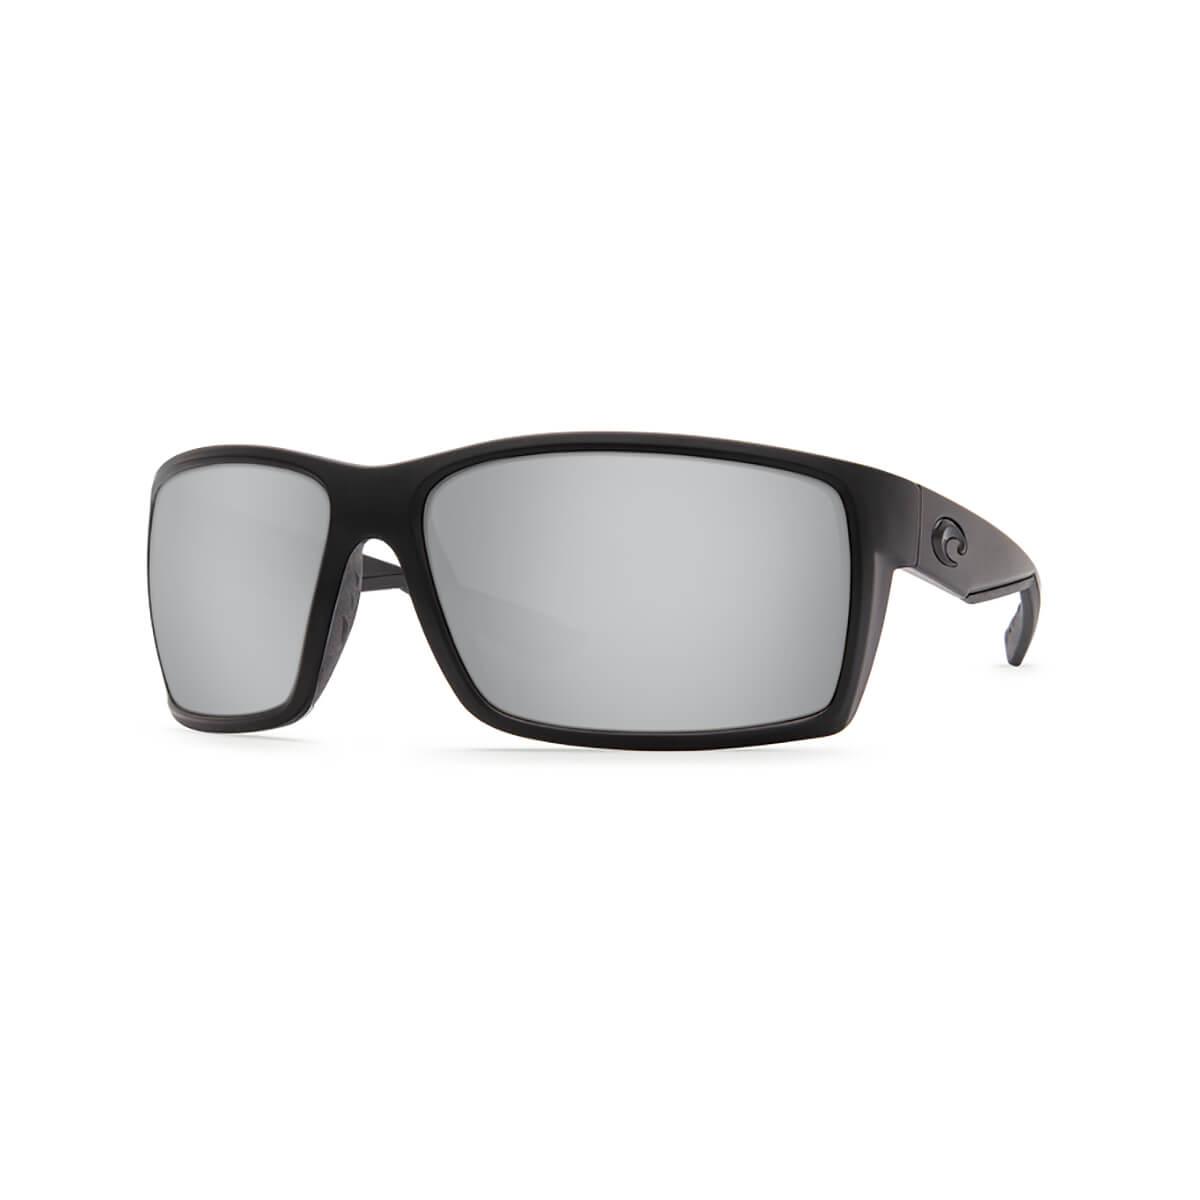  Reefton 580p Sunglasses - Polarized Plastic